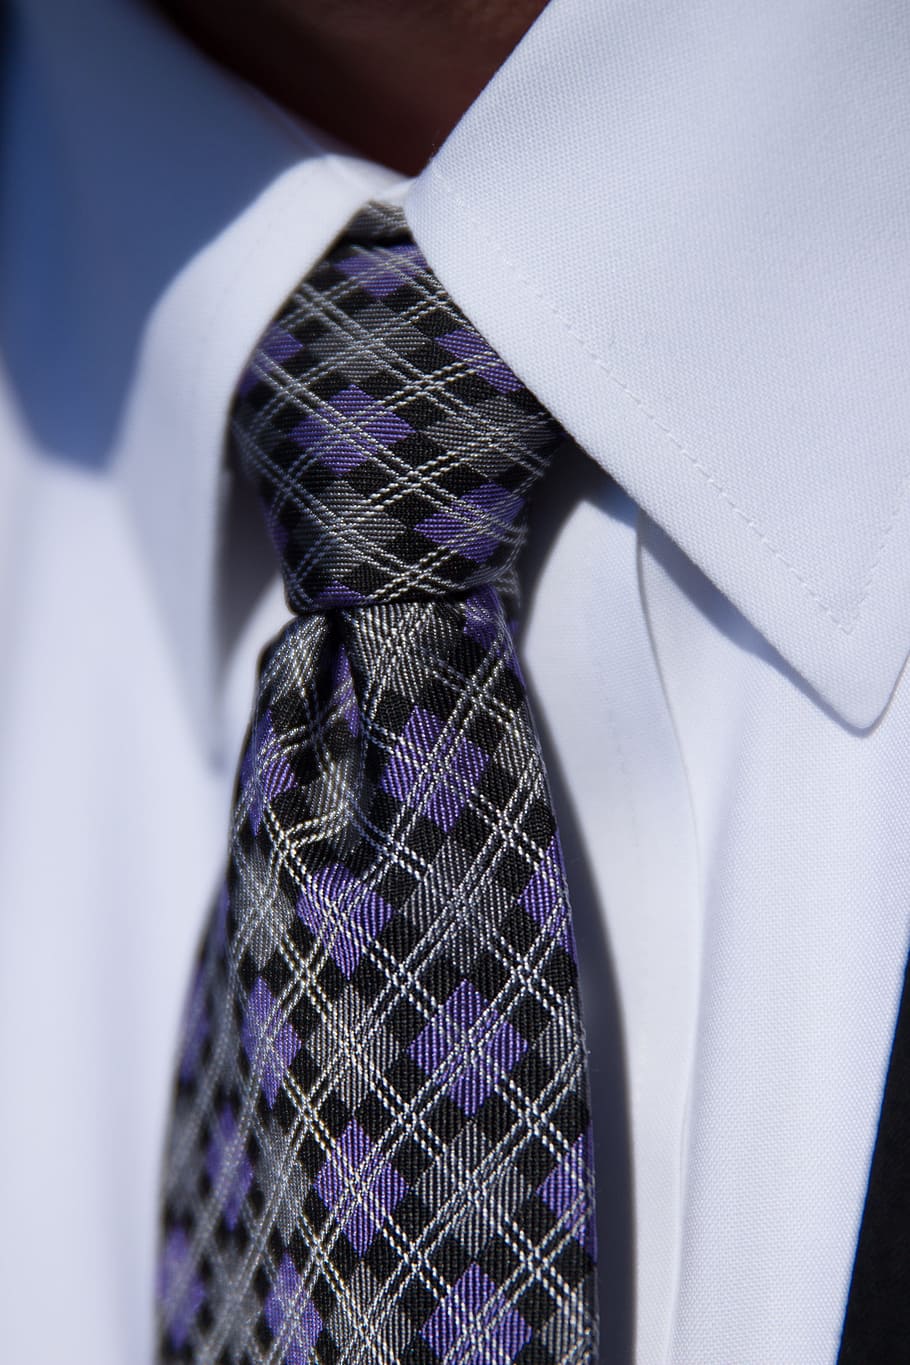 fotografi close-up, beraneka warna, dasi argyle, dasi, jas, bisnis, mode, kemeja, pria, tampan